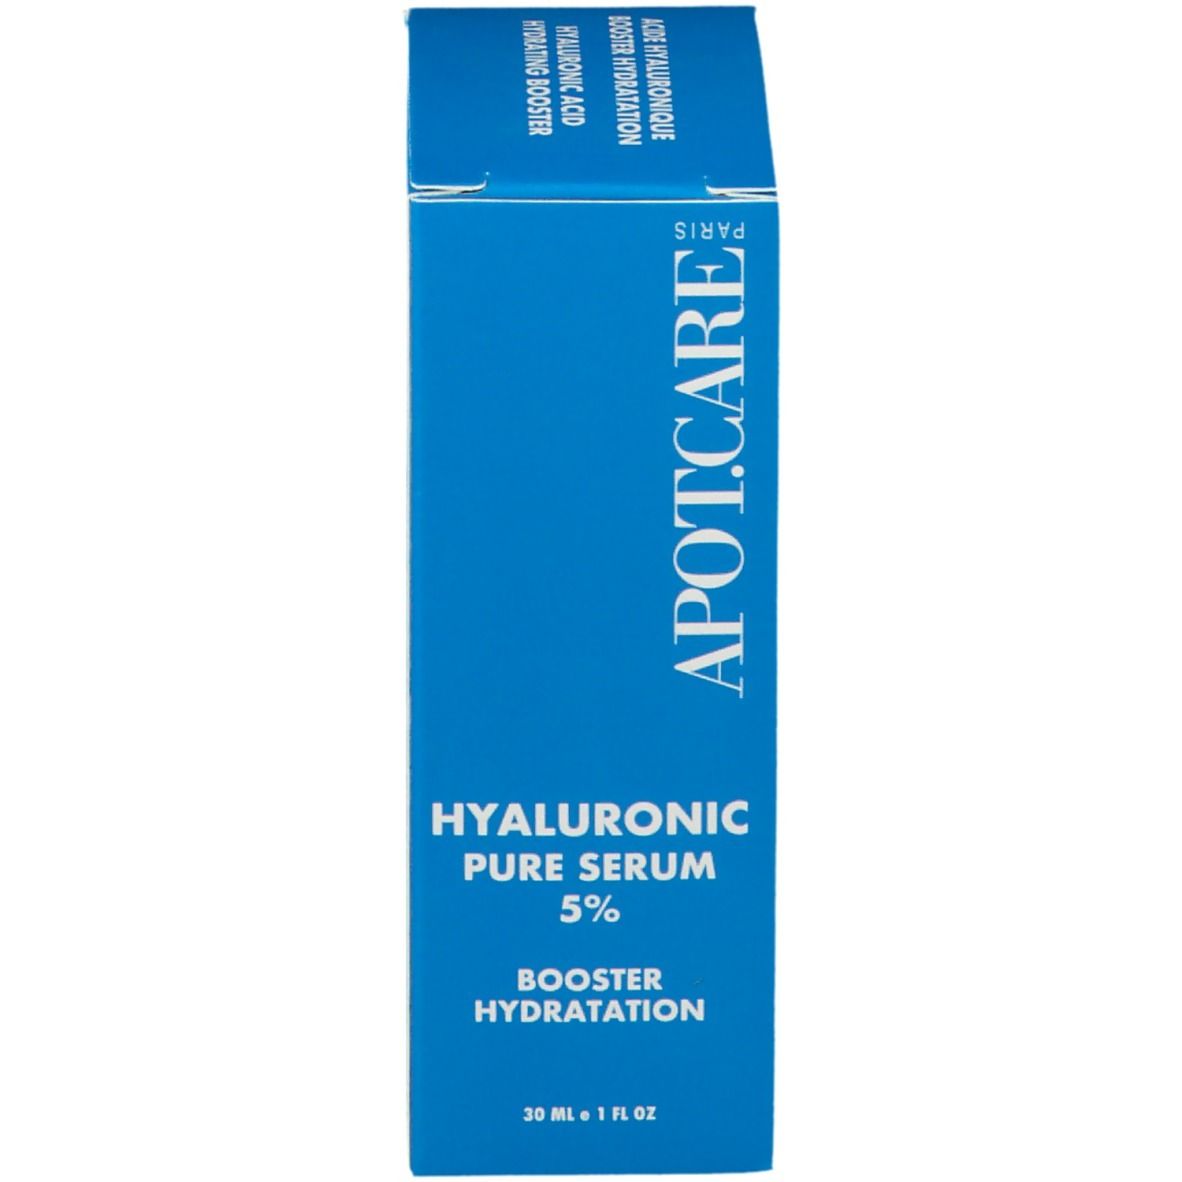 APOT.CARE Pure Serum Hyaluronic